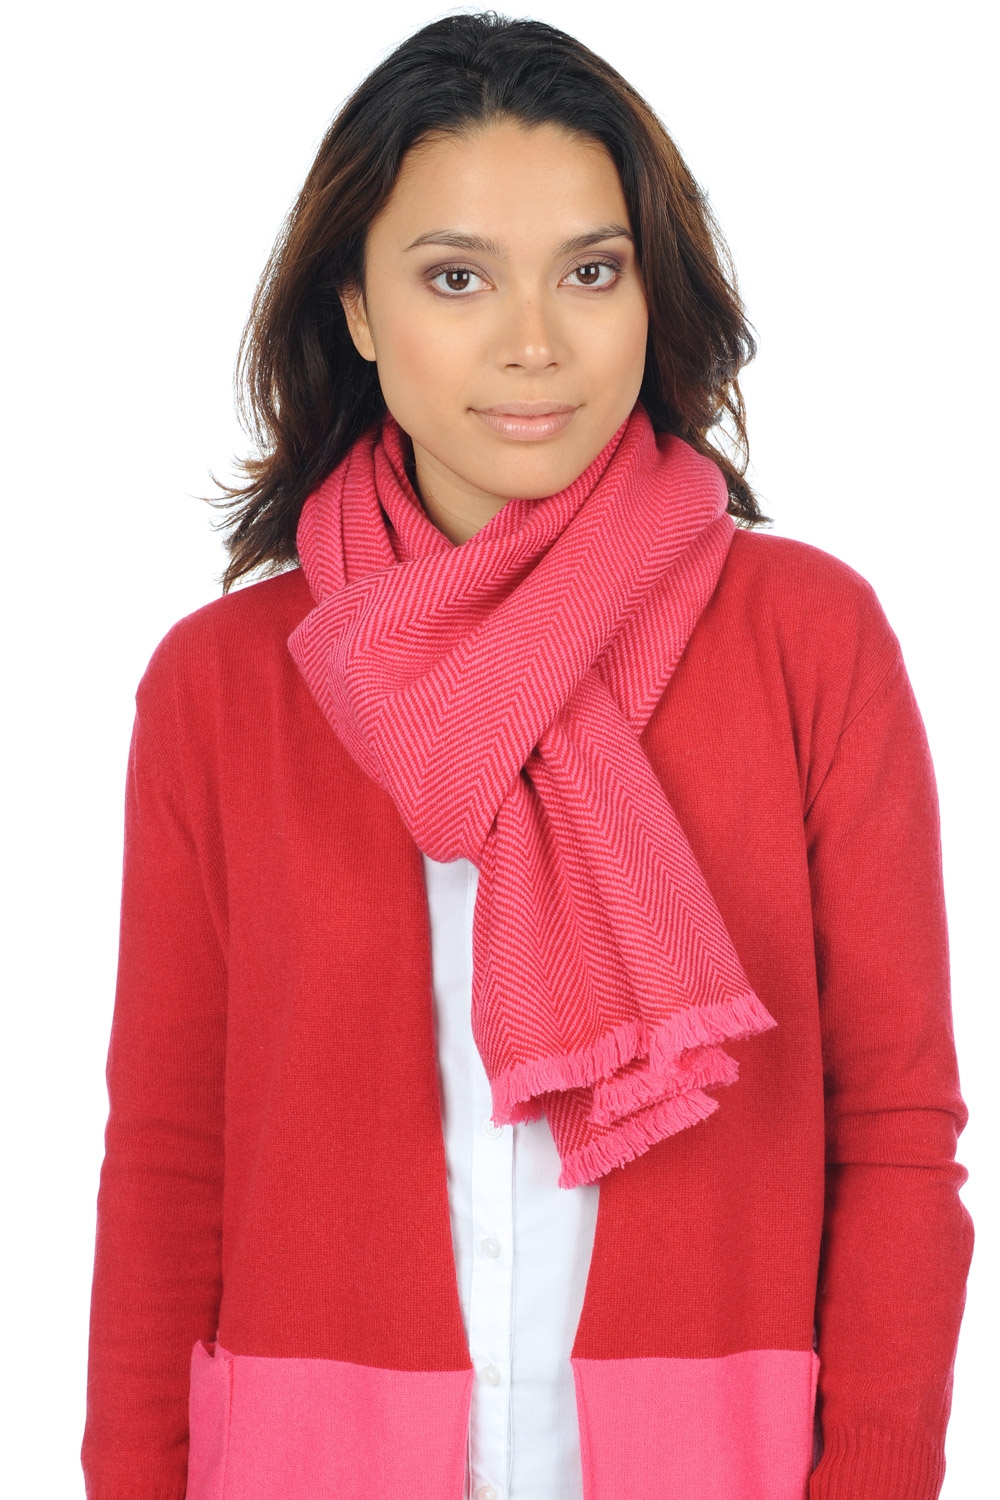 Cashmere accessori sciarpe foulard orage rosa shocking rosso rubino 200 x 35 cm